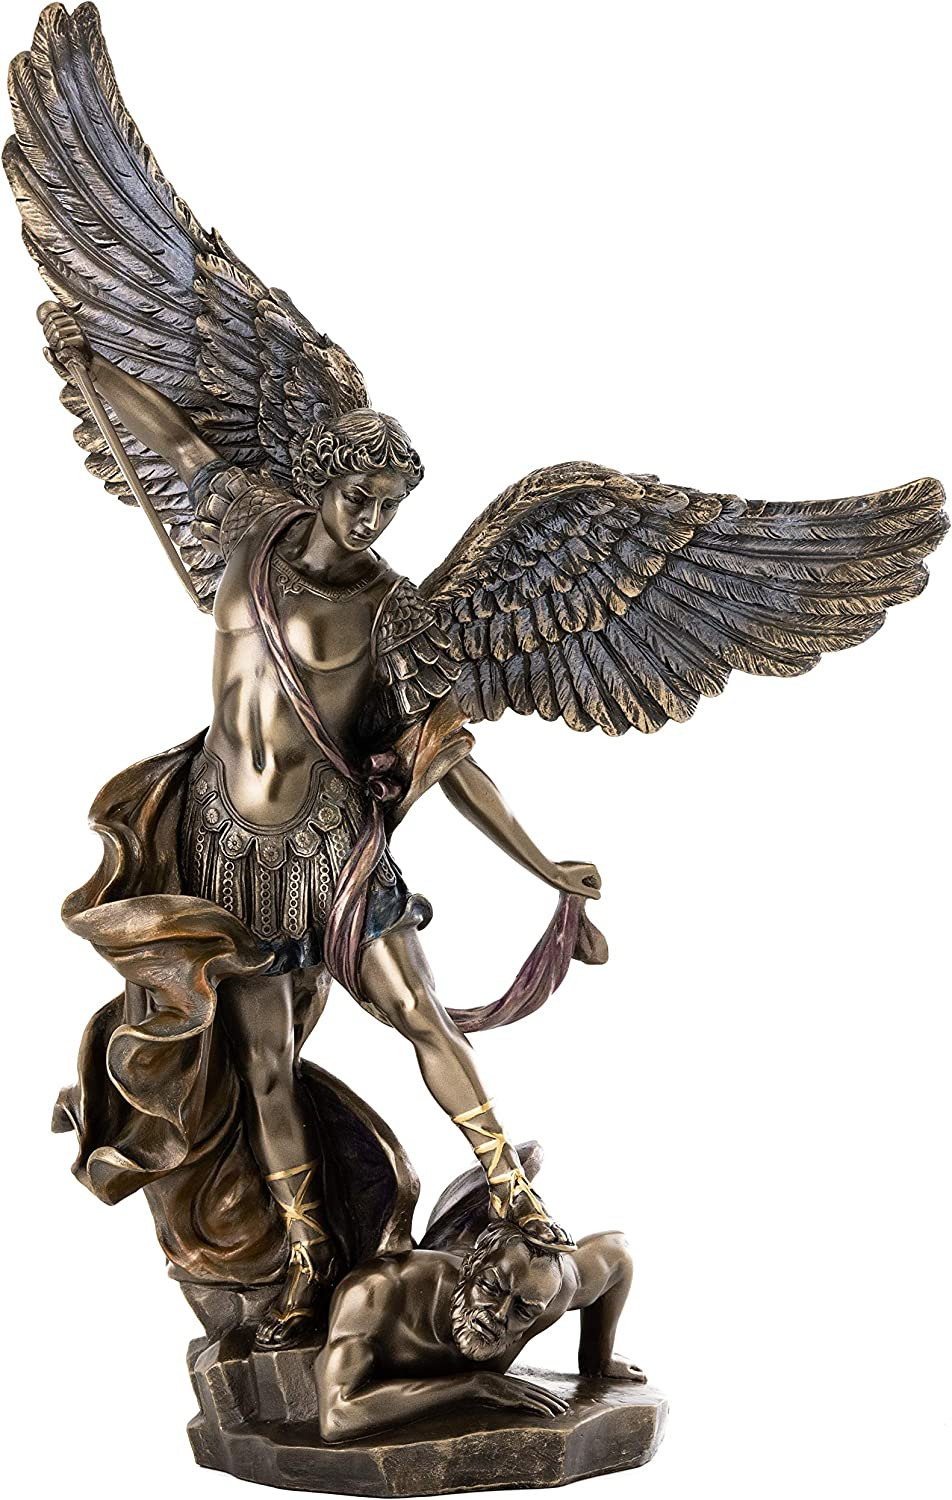 Archangel St. Michael Statue - Michael Archangel of Heaven Defeating Lucifer in 